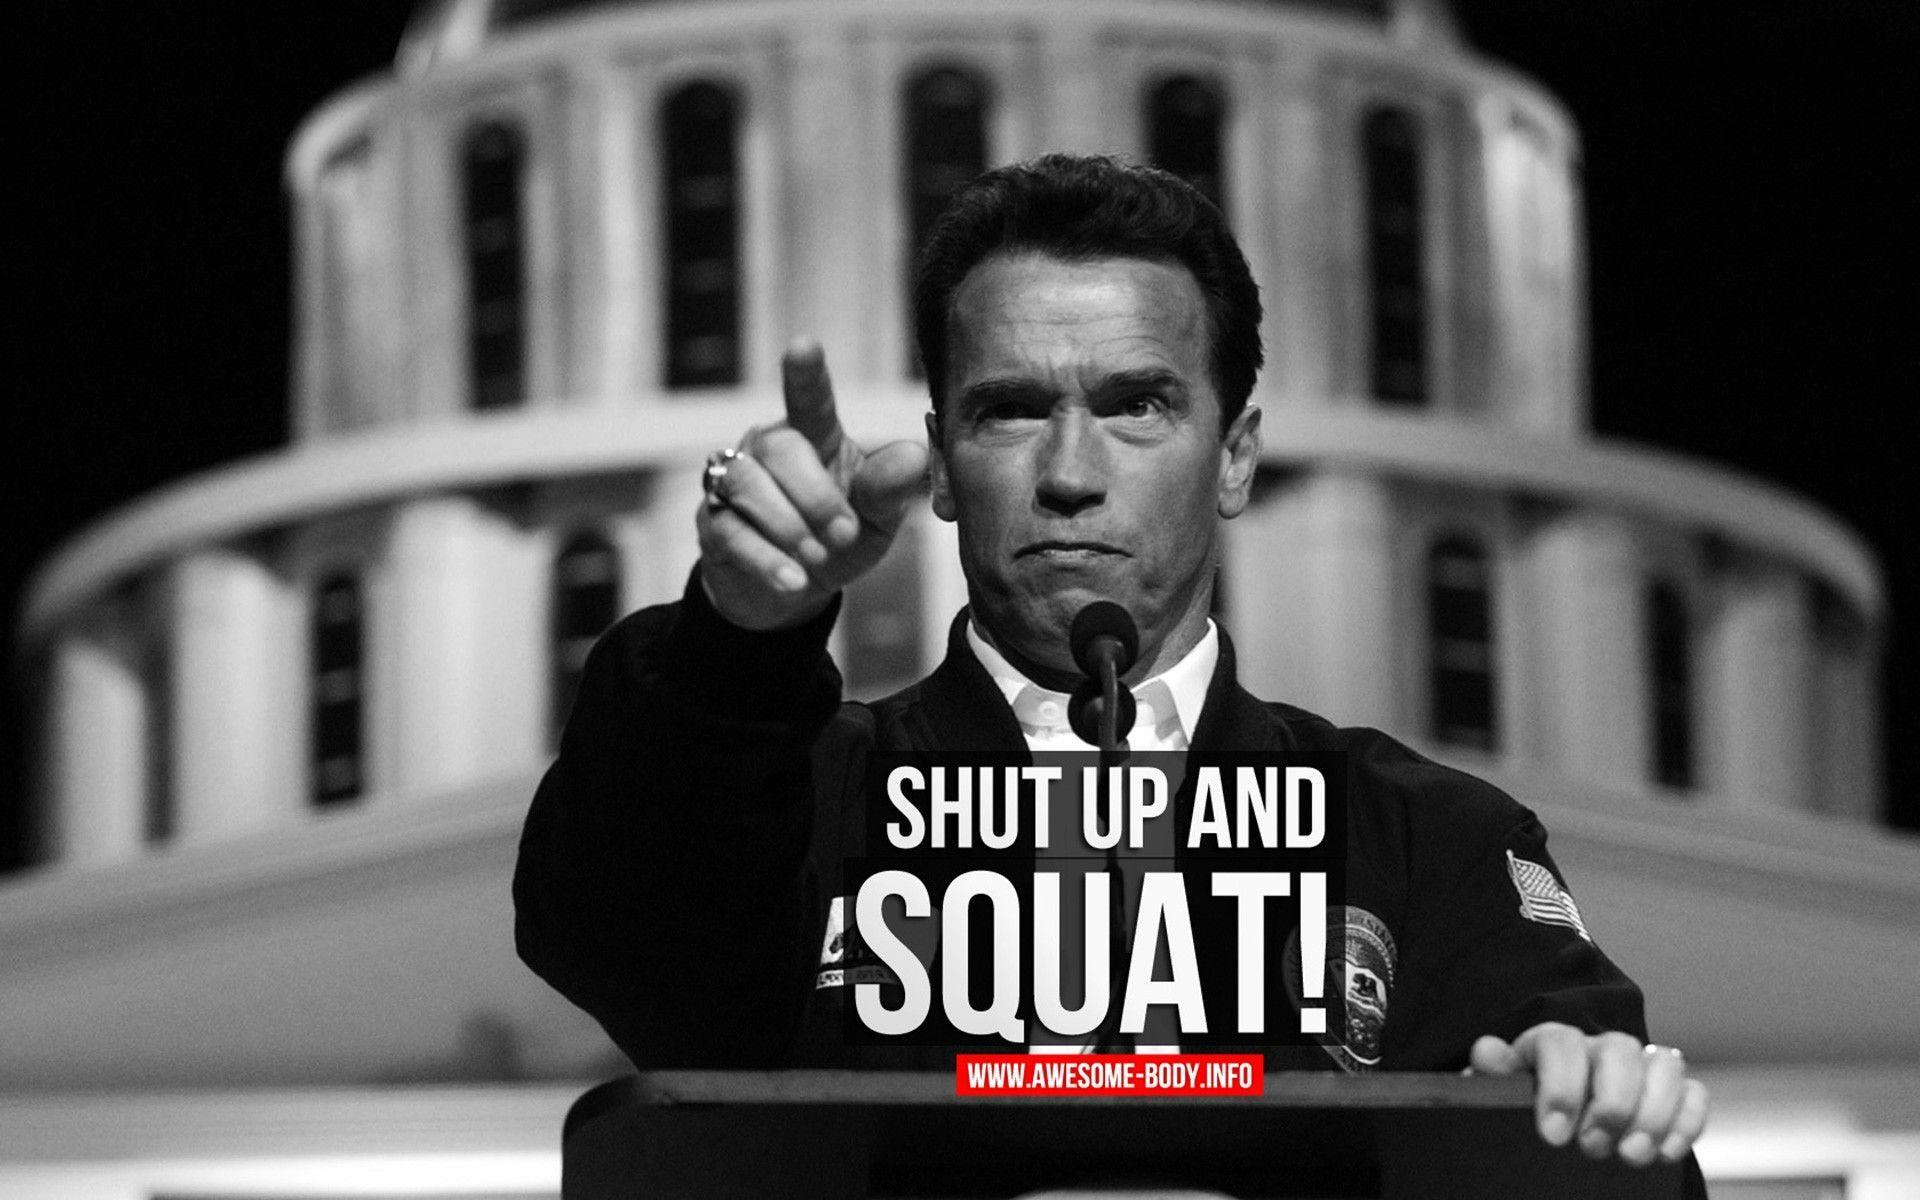 Arnold Schwarzenegger Quote Wallpaper. Shut Up And SQUAT!. Motivation